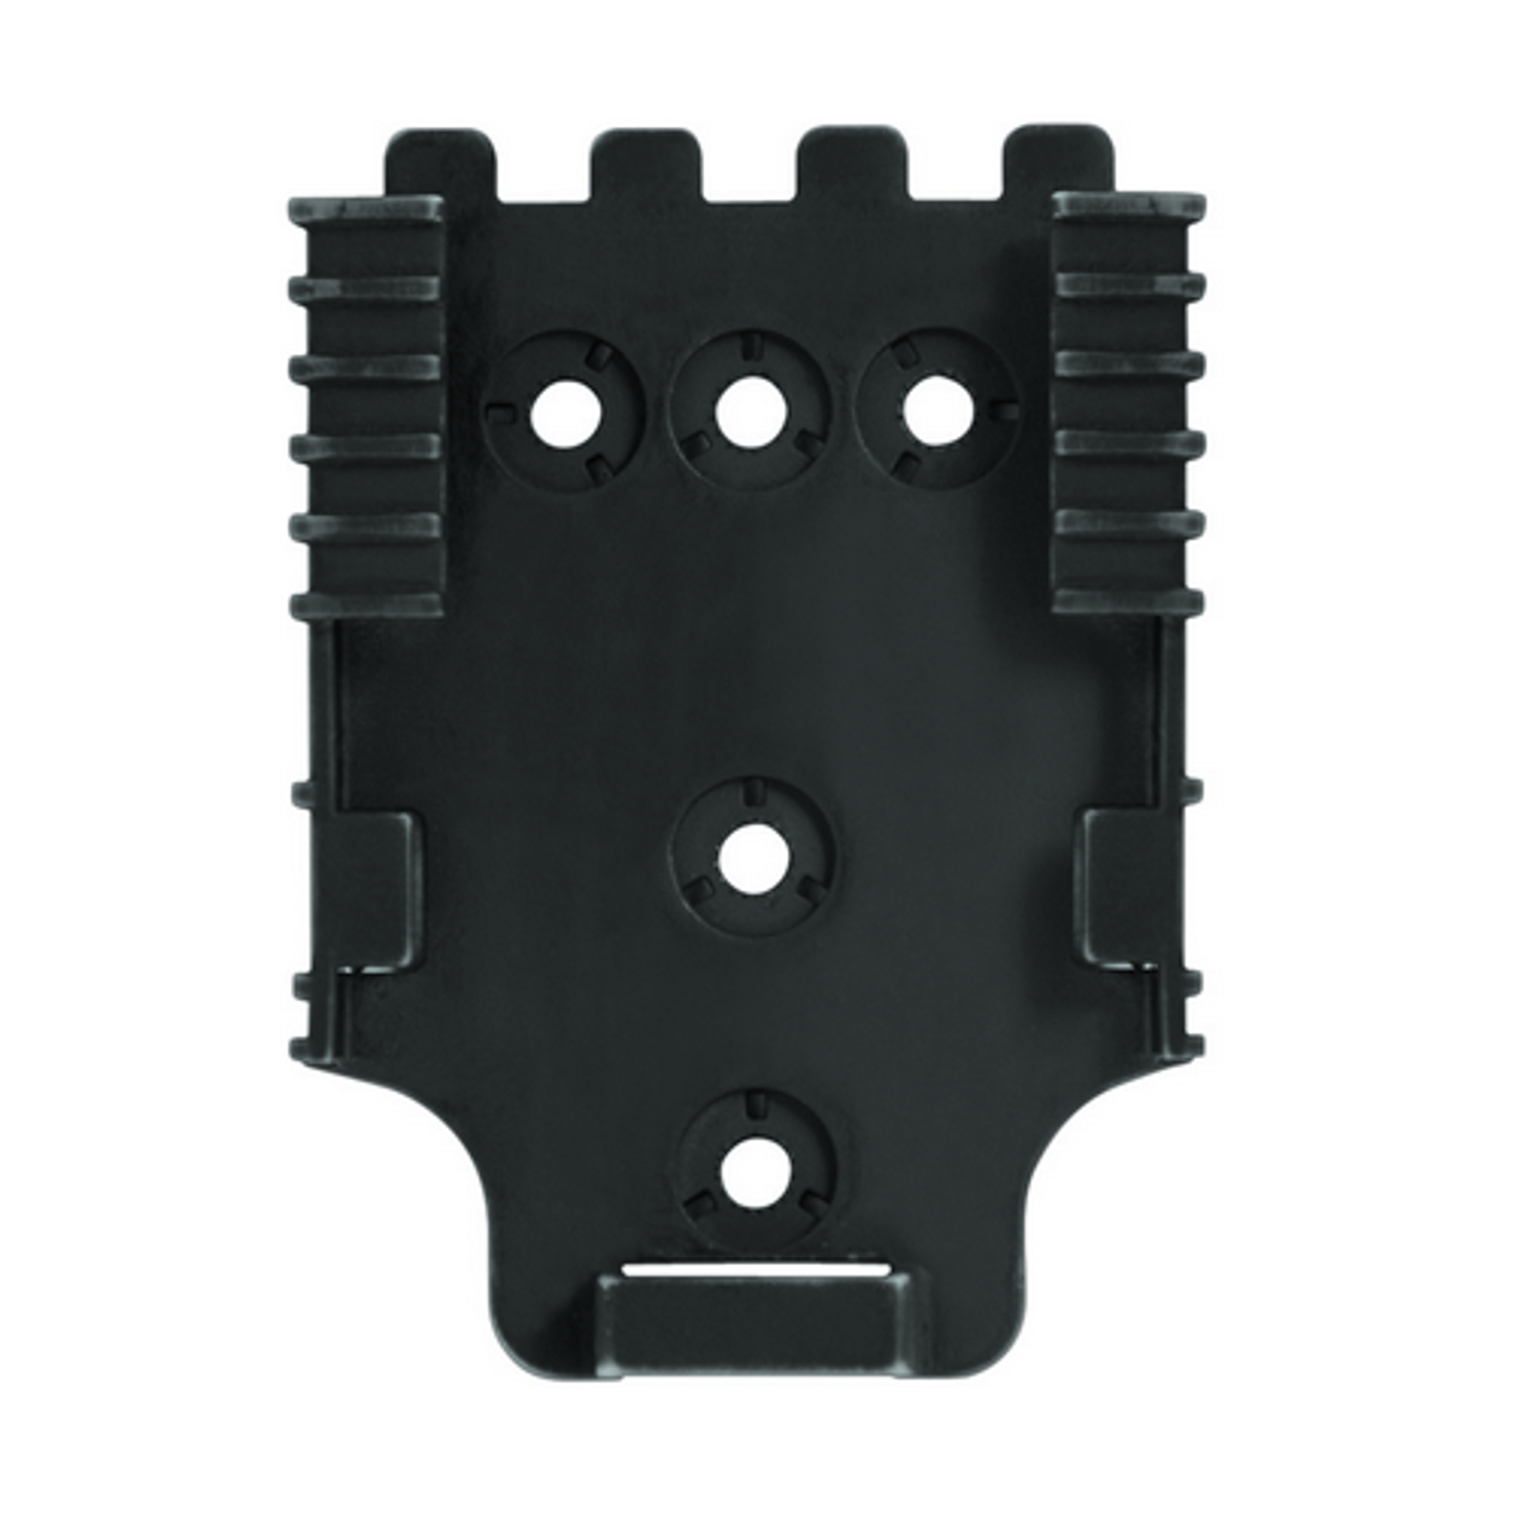 Model 6004-22 Quick Locking System - Receiver Plate (qls 22) - KR6004-22-76